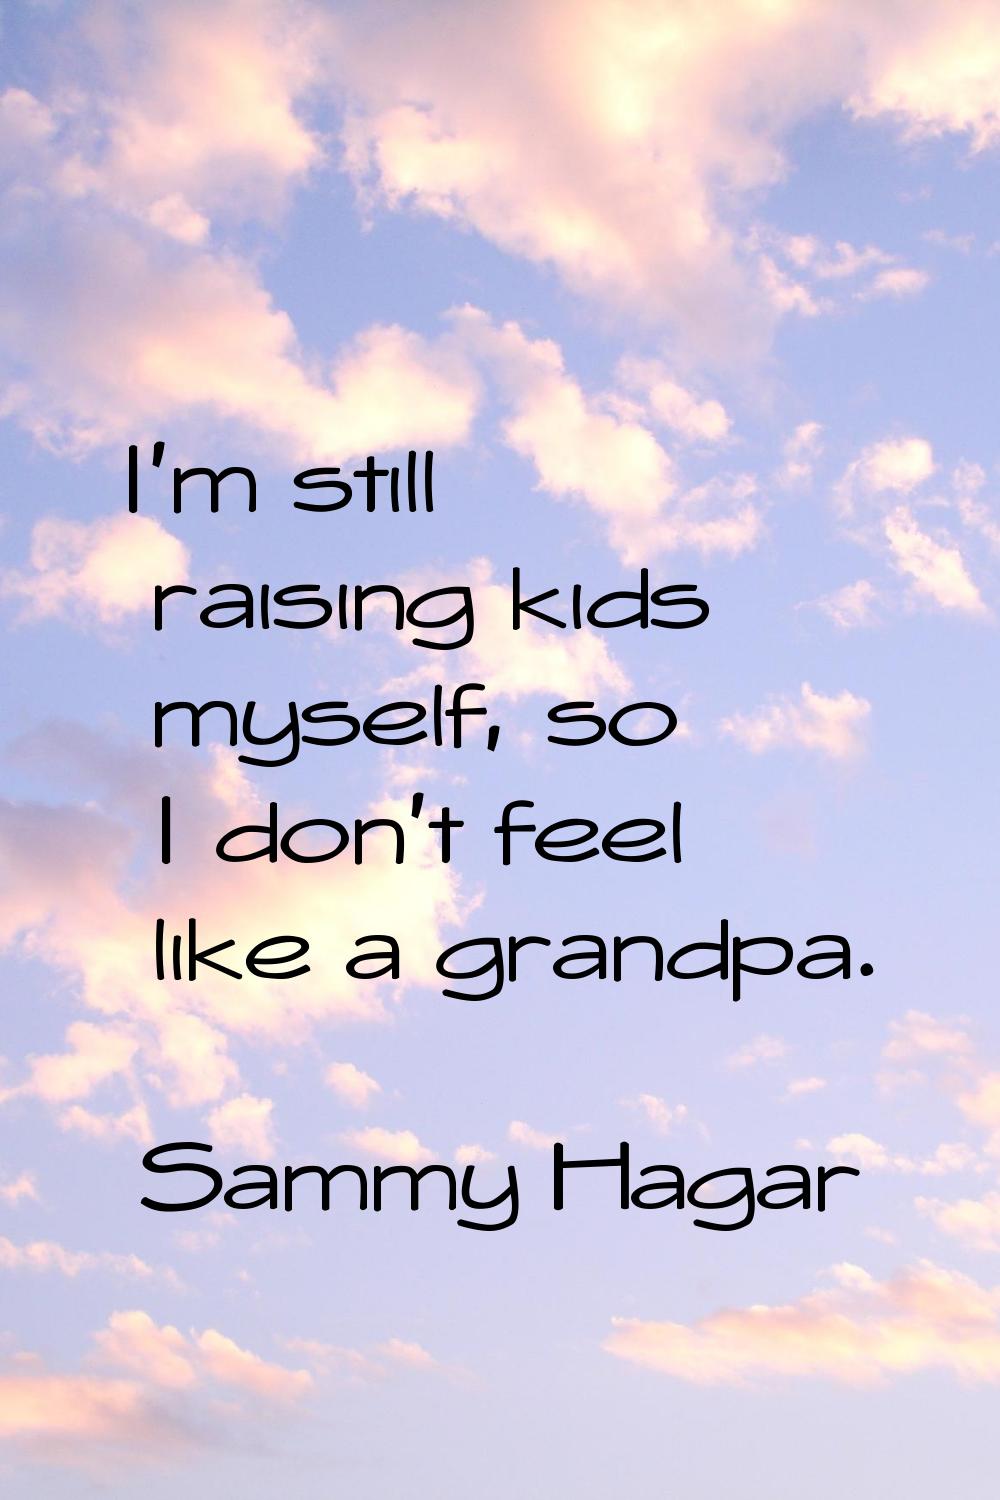 I'm still raising kids myself, so I don't feel like a grandpa.